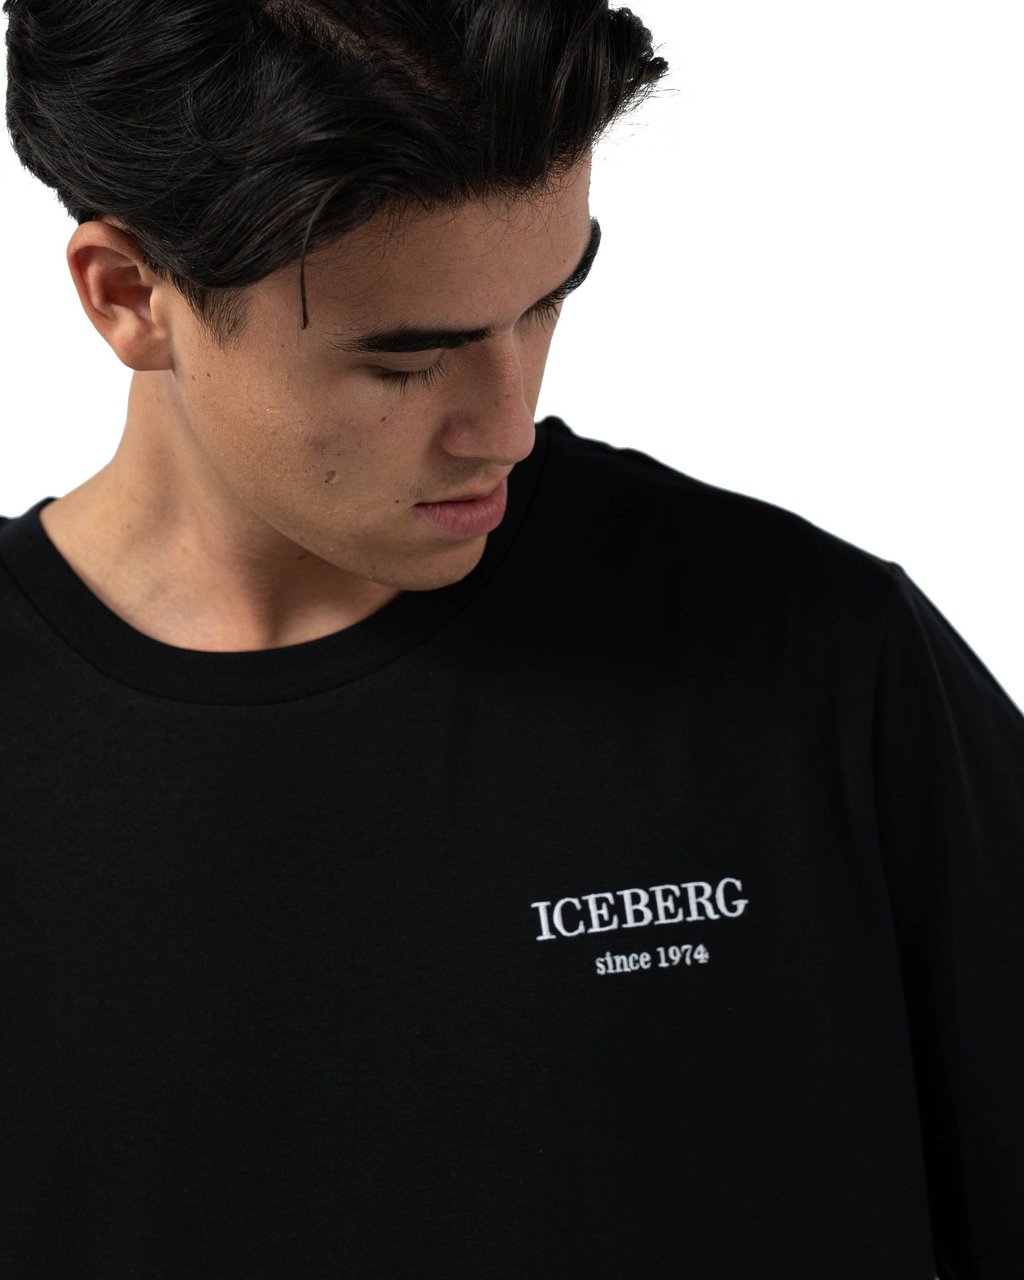 Iceberg Iceberg Heren T-shirt Zwart F014-6301/9000 Zwart